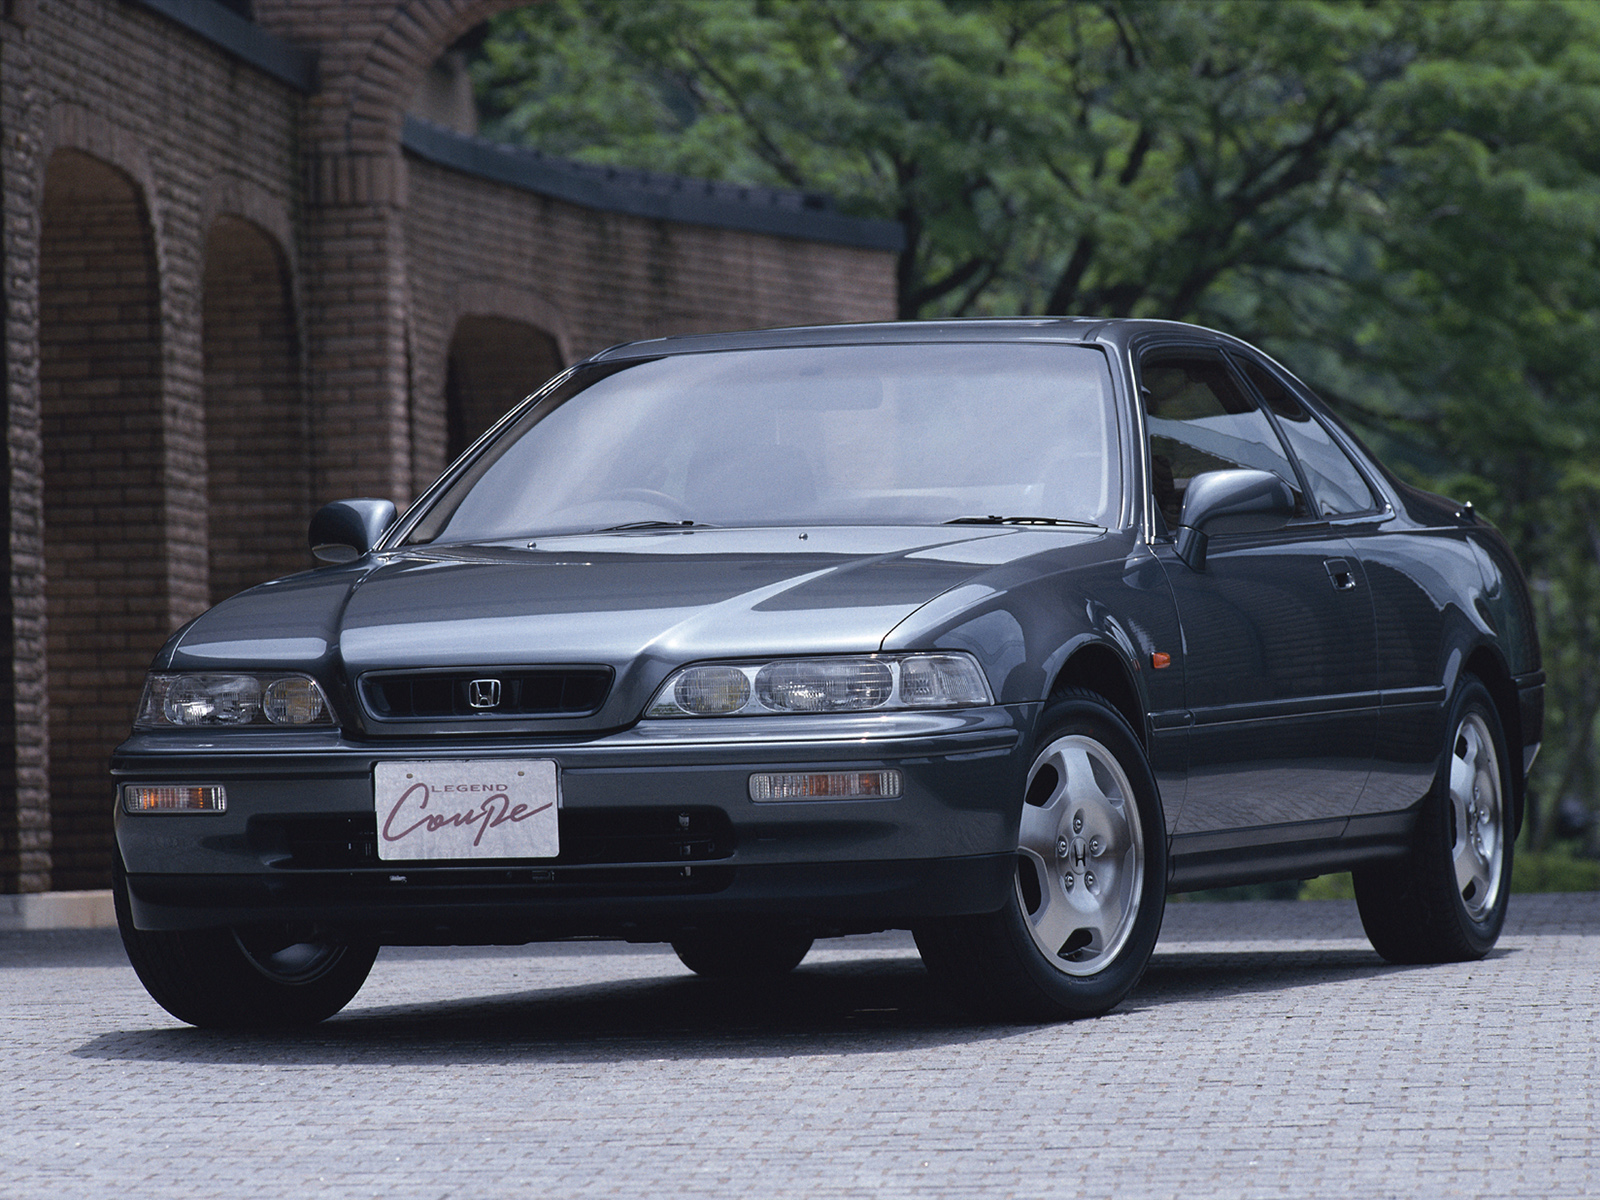 Honda 96 год. Honda Legend ka8. Honda Legend Coupe 1991. Honda Legend 2 Coupe. Honda Legend ka8 Coupe.